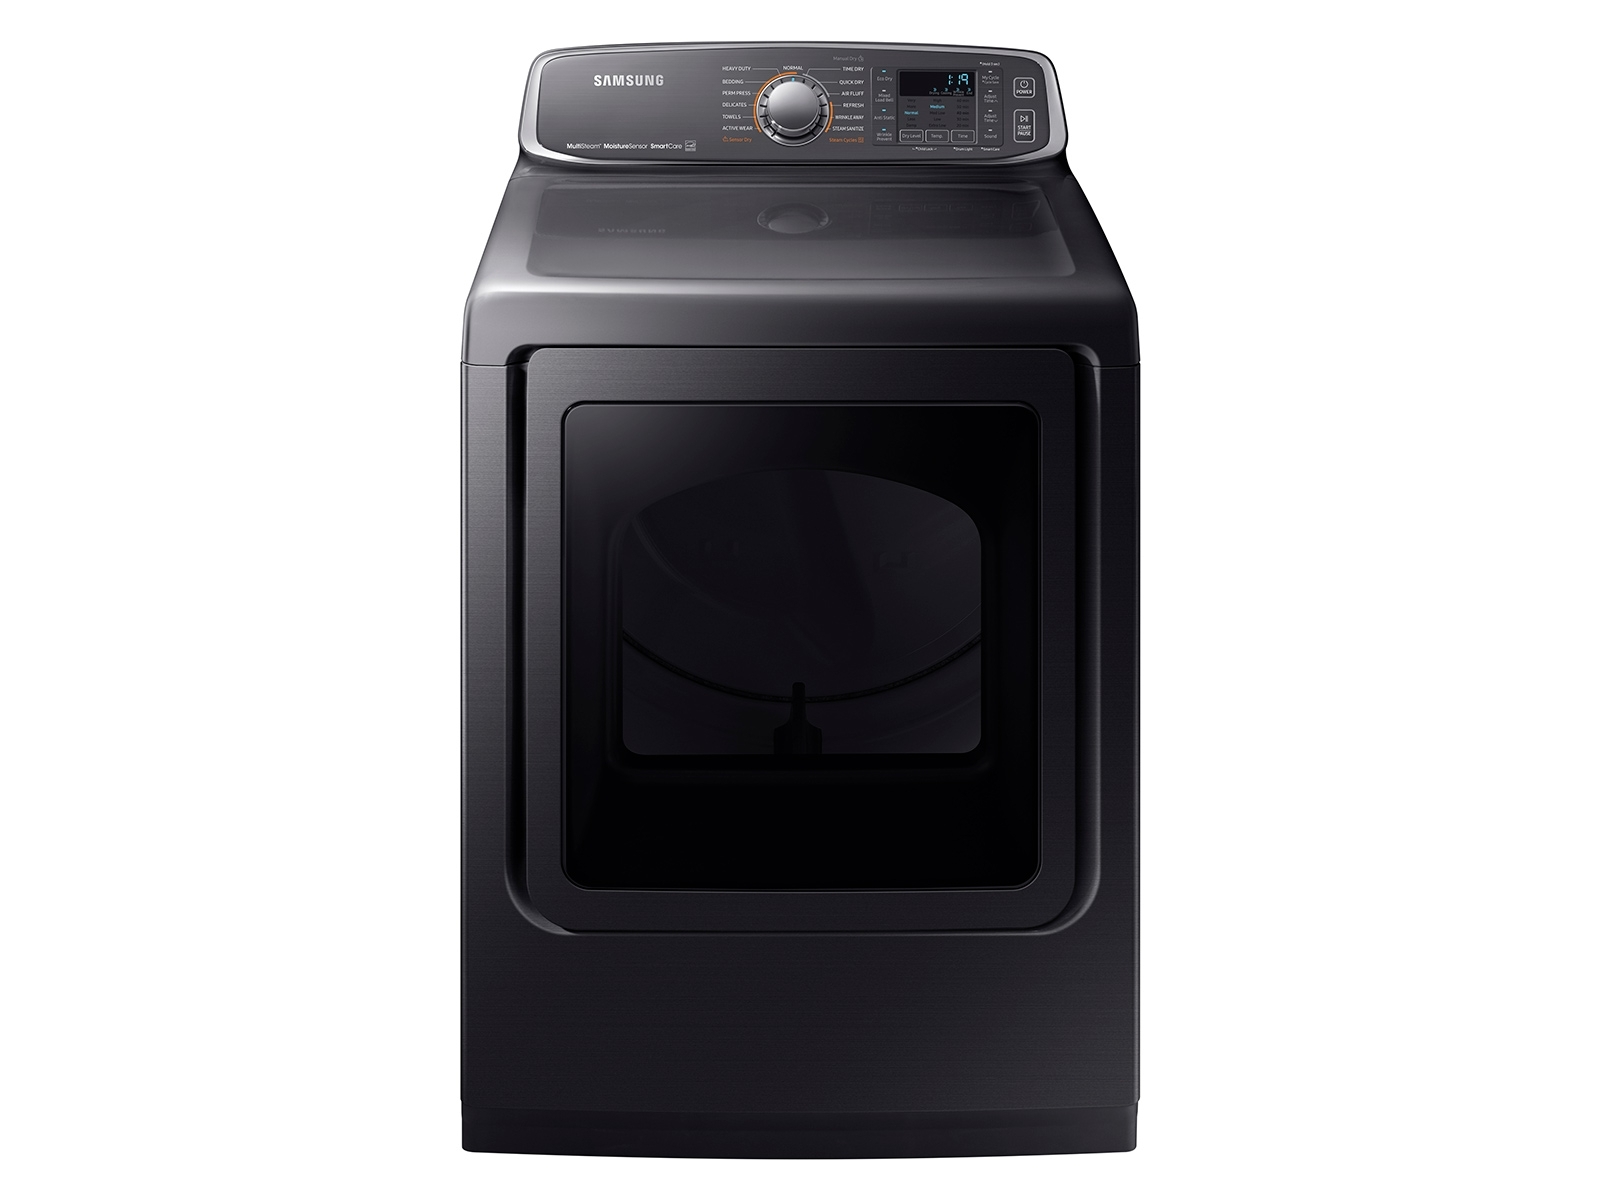 Samsung 7.4 cu. ft. Electric Dryer in Black Stainless Steel(DVE52M7750V/A3)